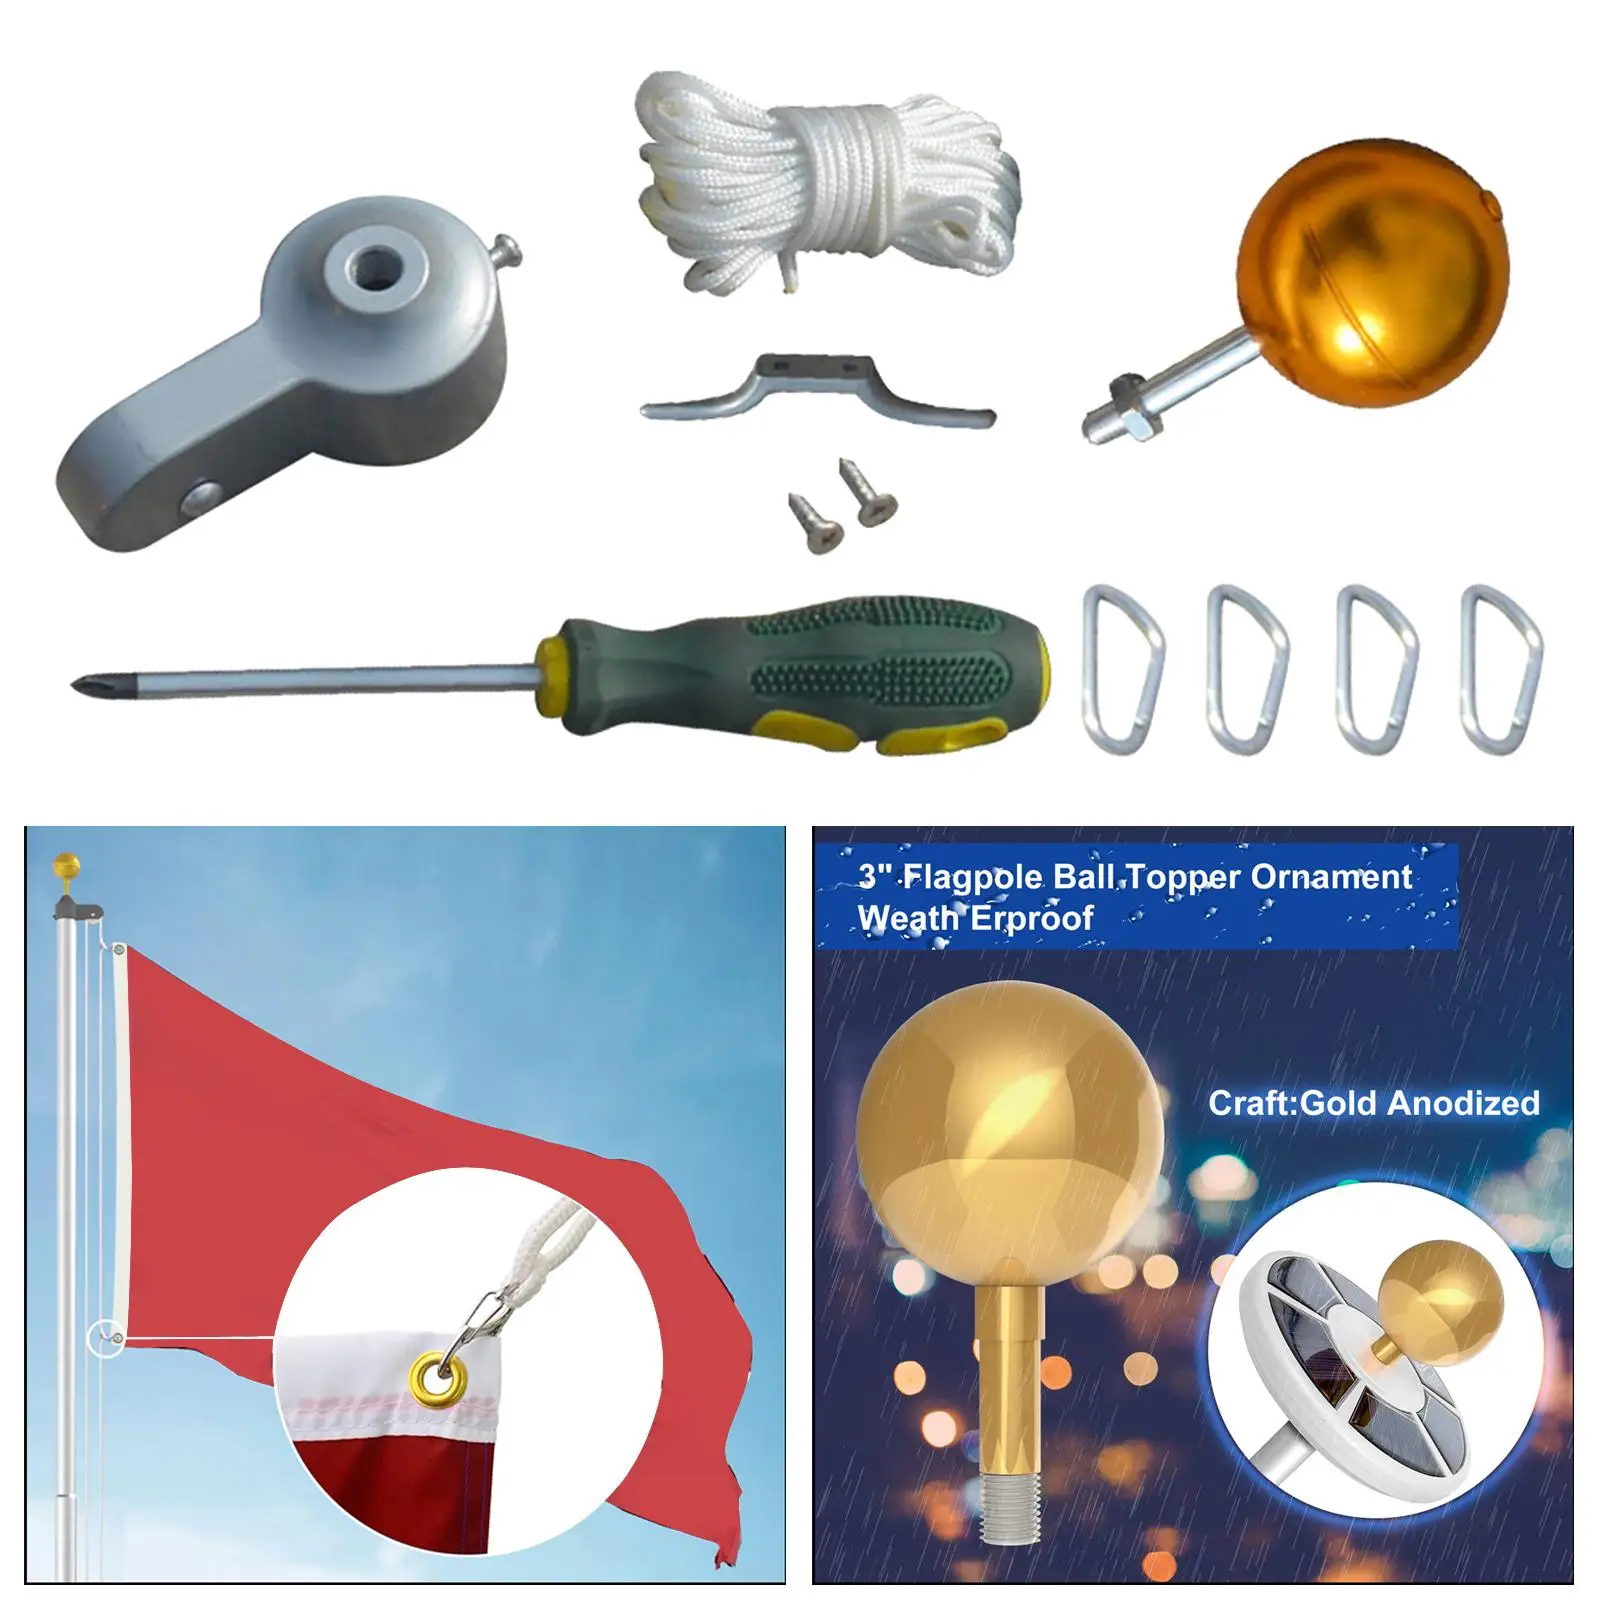 Premium Flagpole Hardware Screws Flagpole Accessories Repair Kit, Pulley Gold Ball,